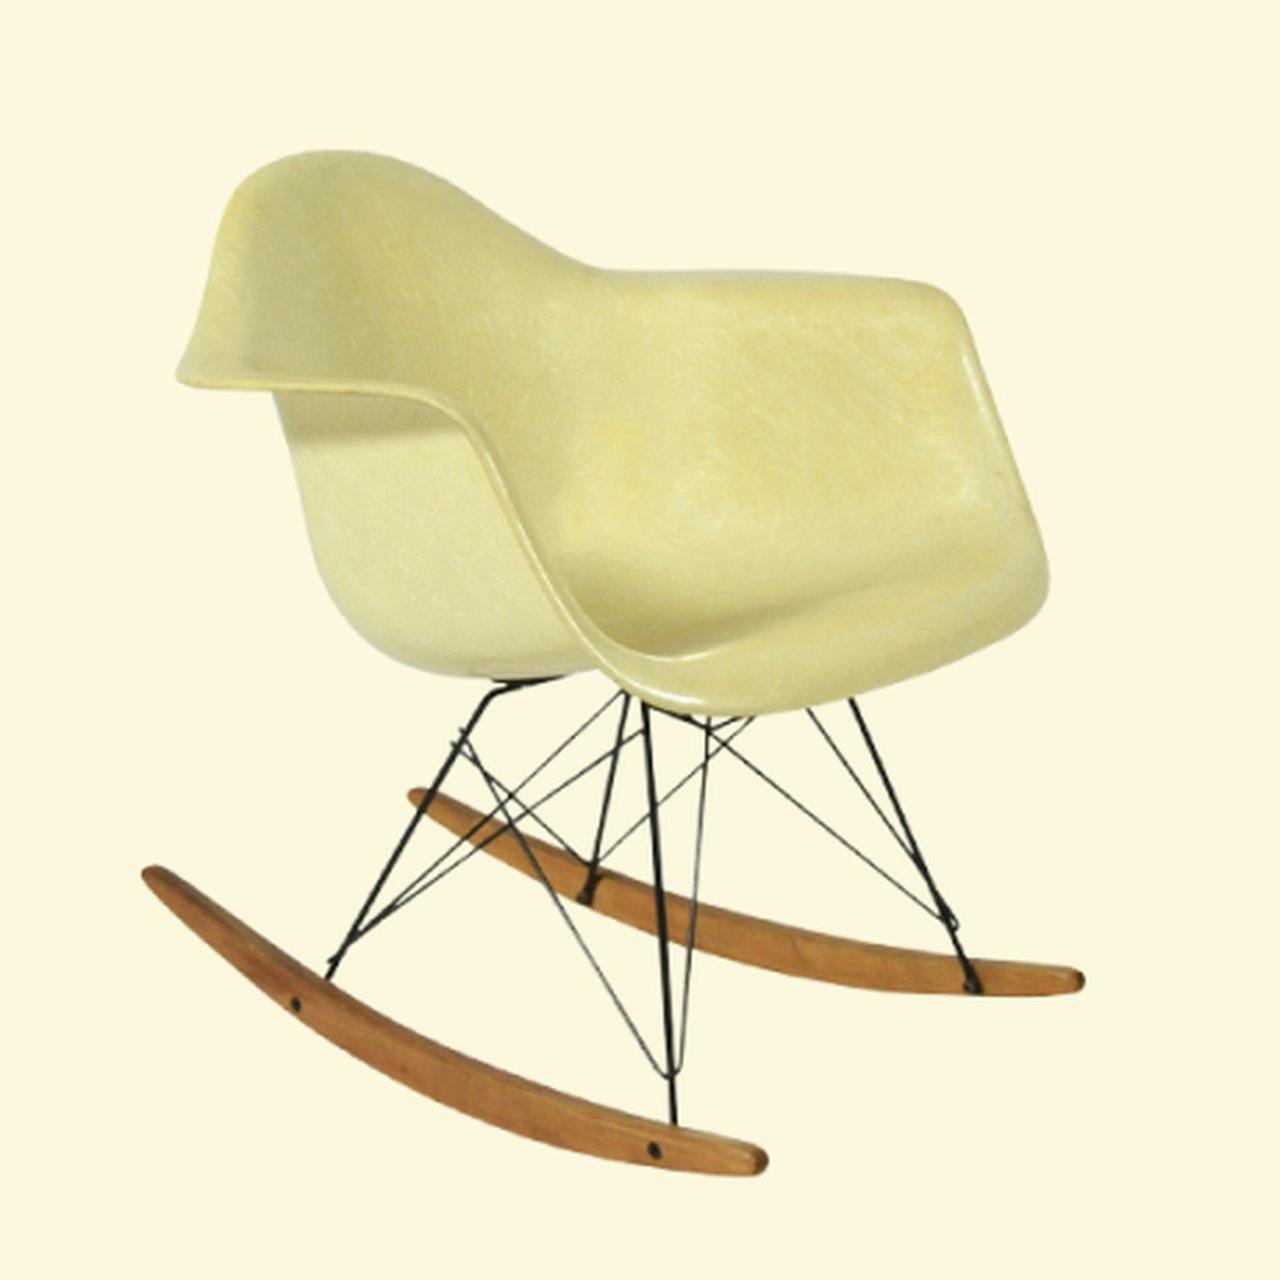 50's Design Rocking chairs